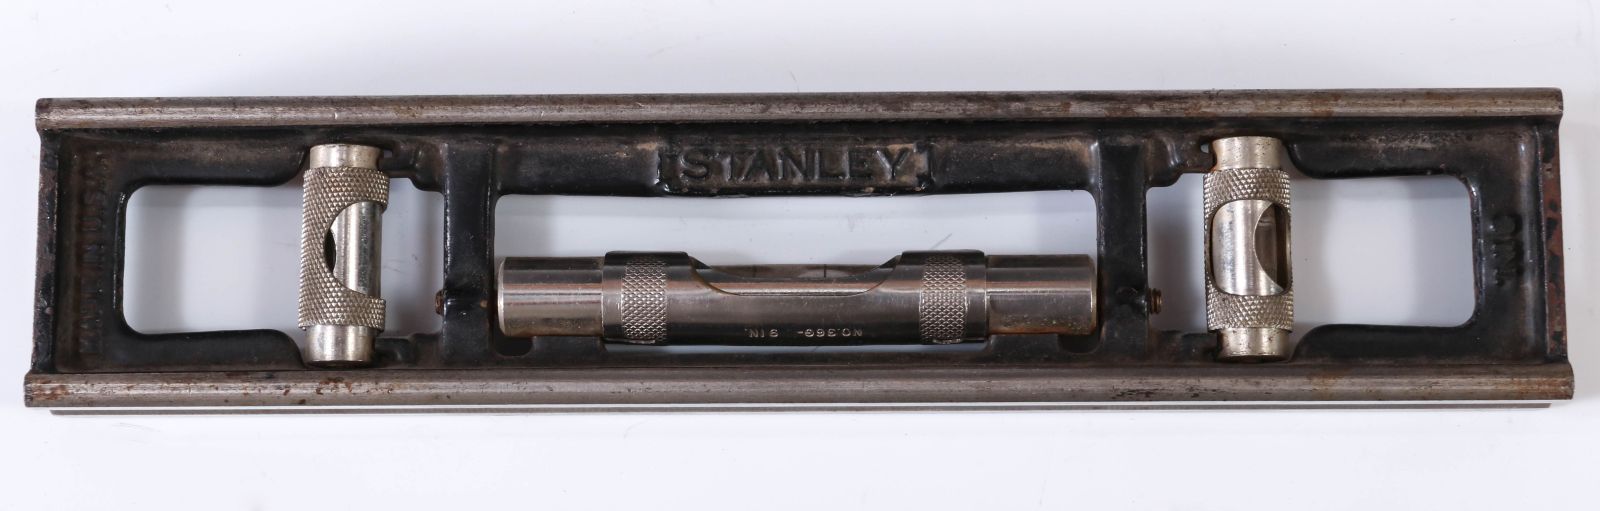 A STANLEY NO. 36G CAST IRON LEVEL